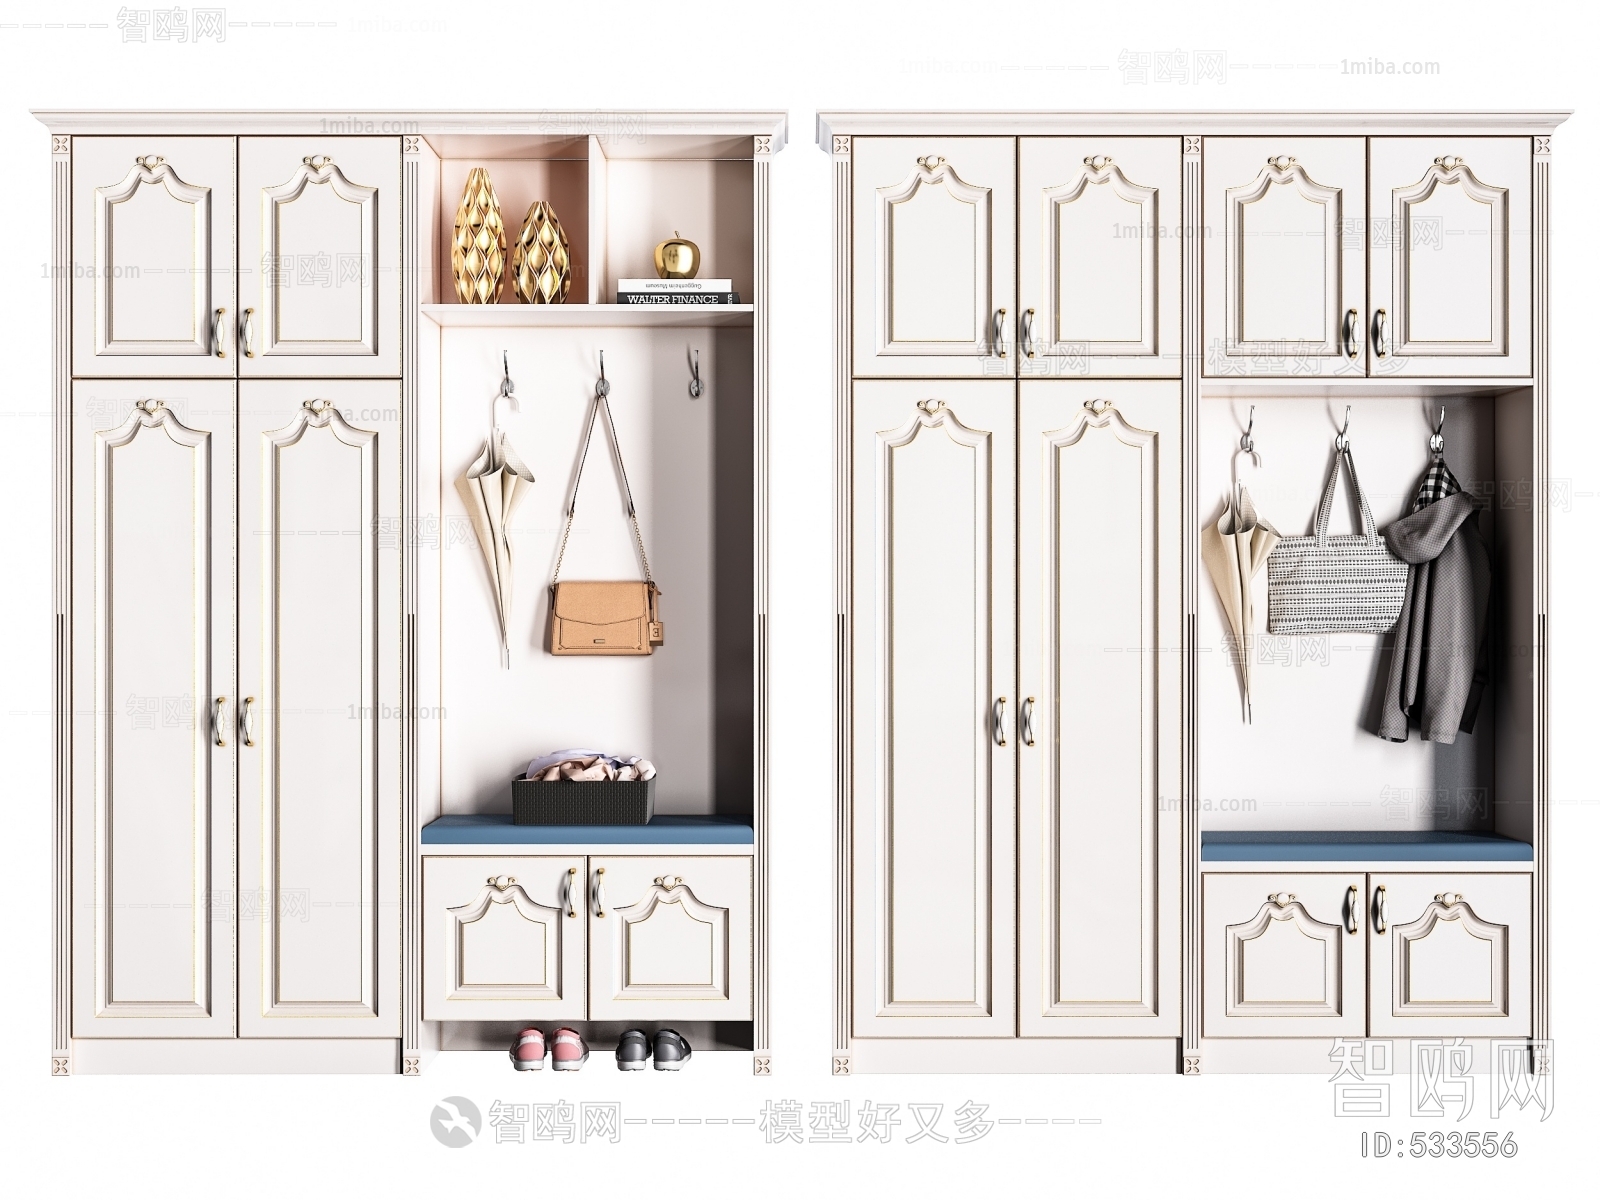 Simple European Style Shoe Cabinet